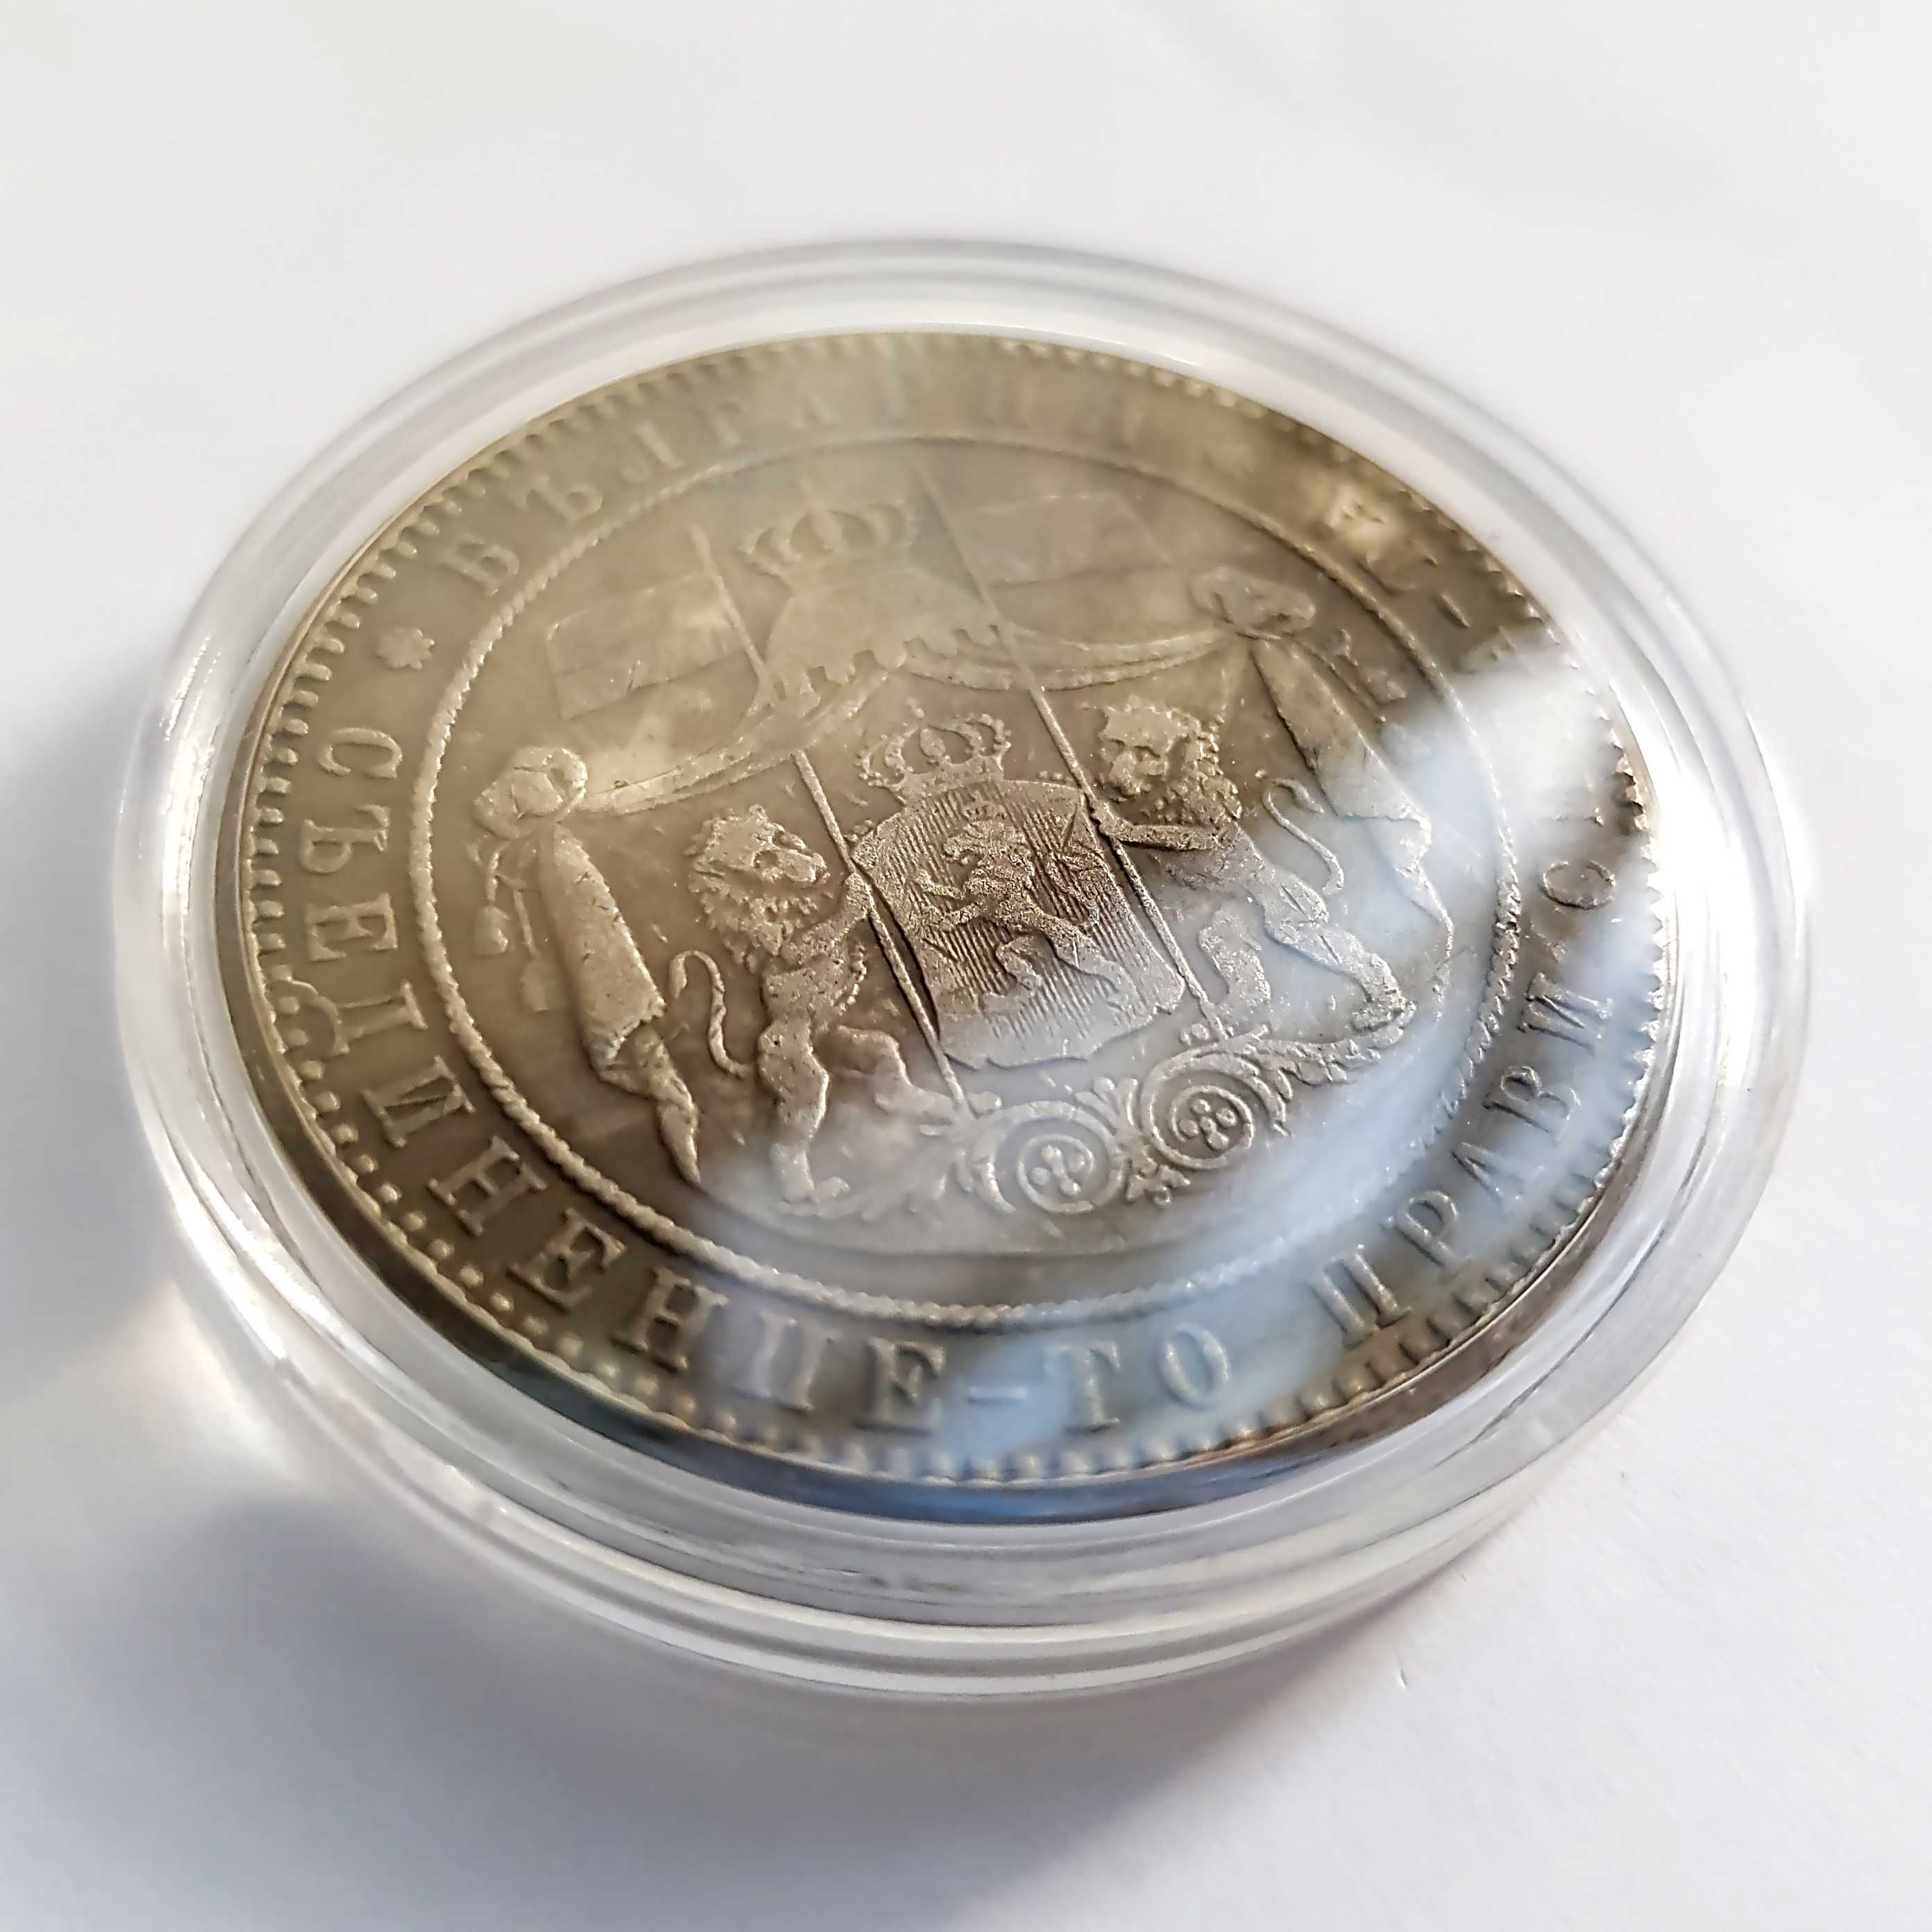 Стари монети - 5 лева 1884, 50 стотинки 1916 и 10 лева 1992 година